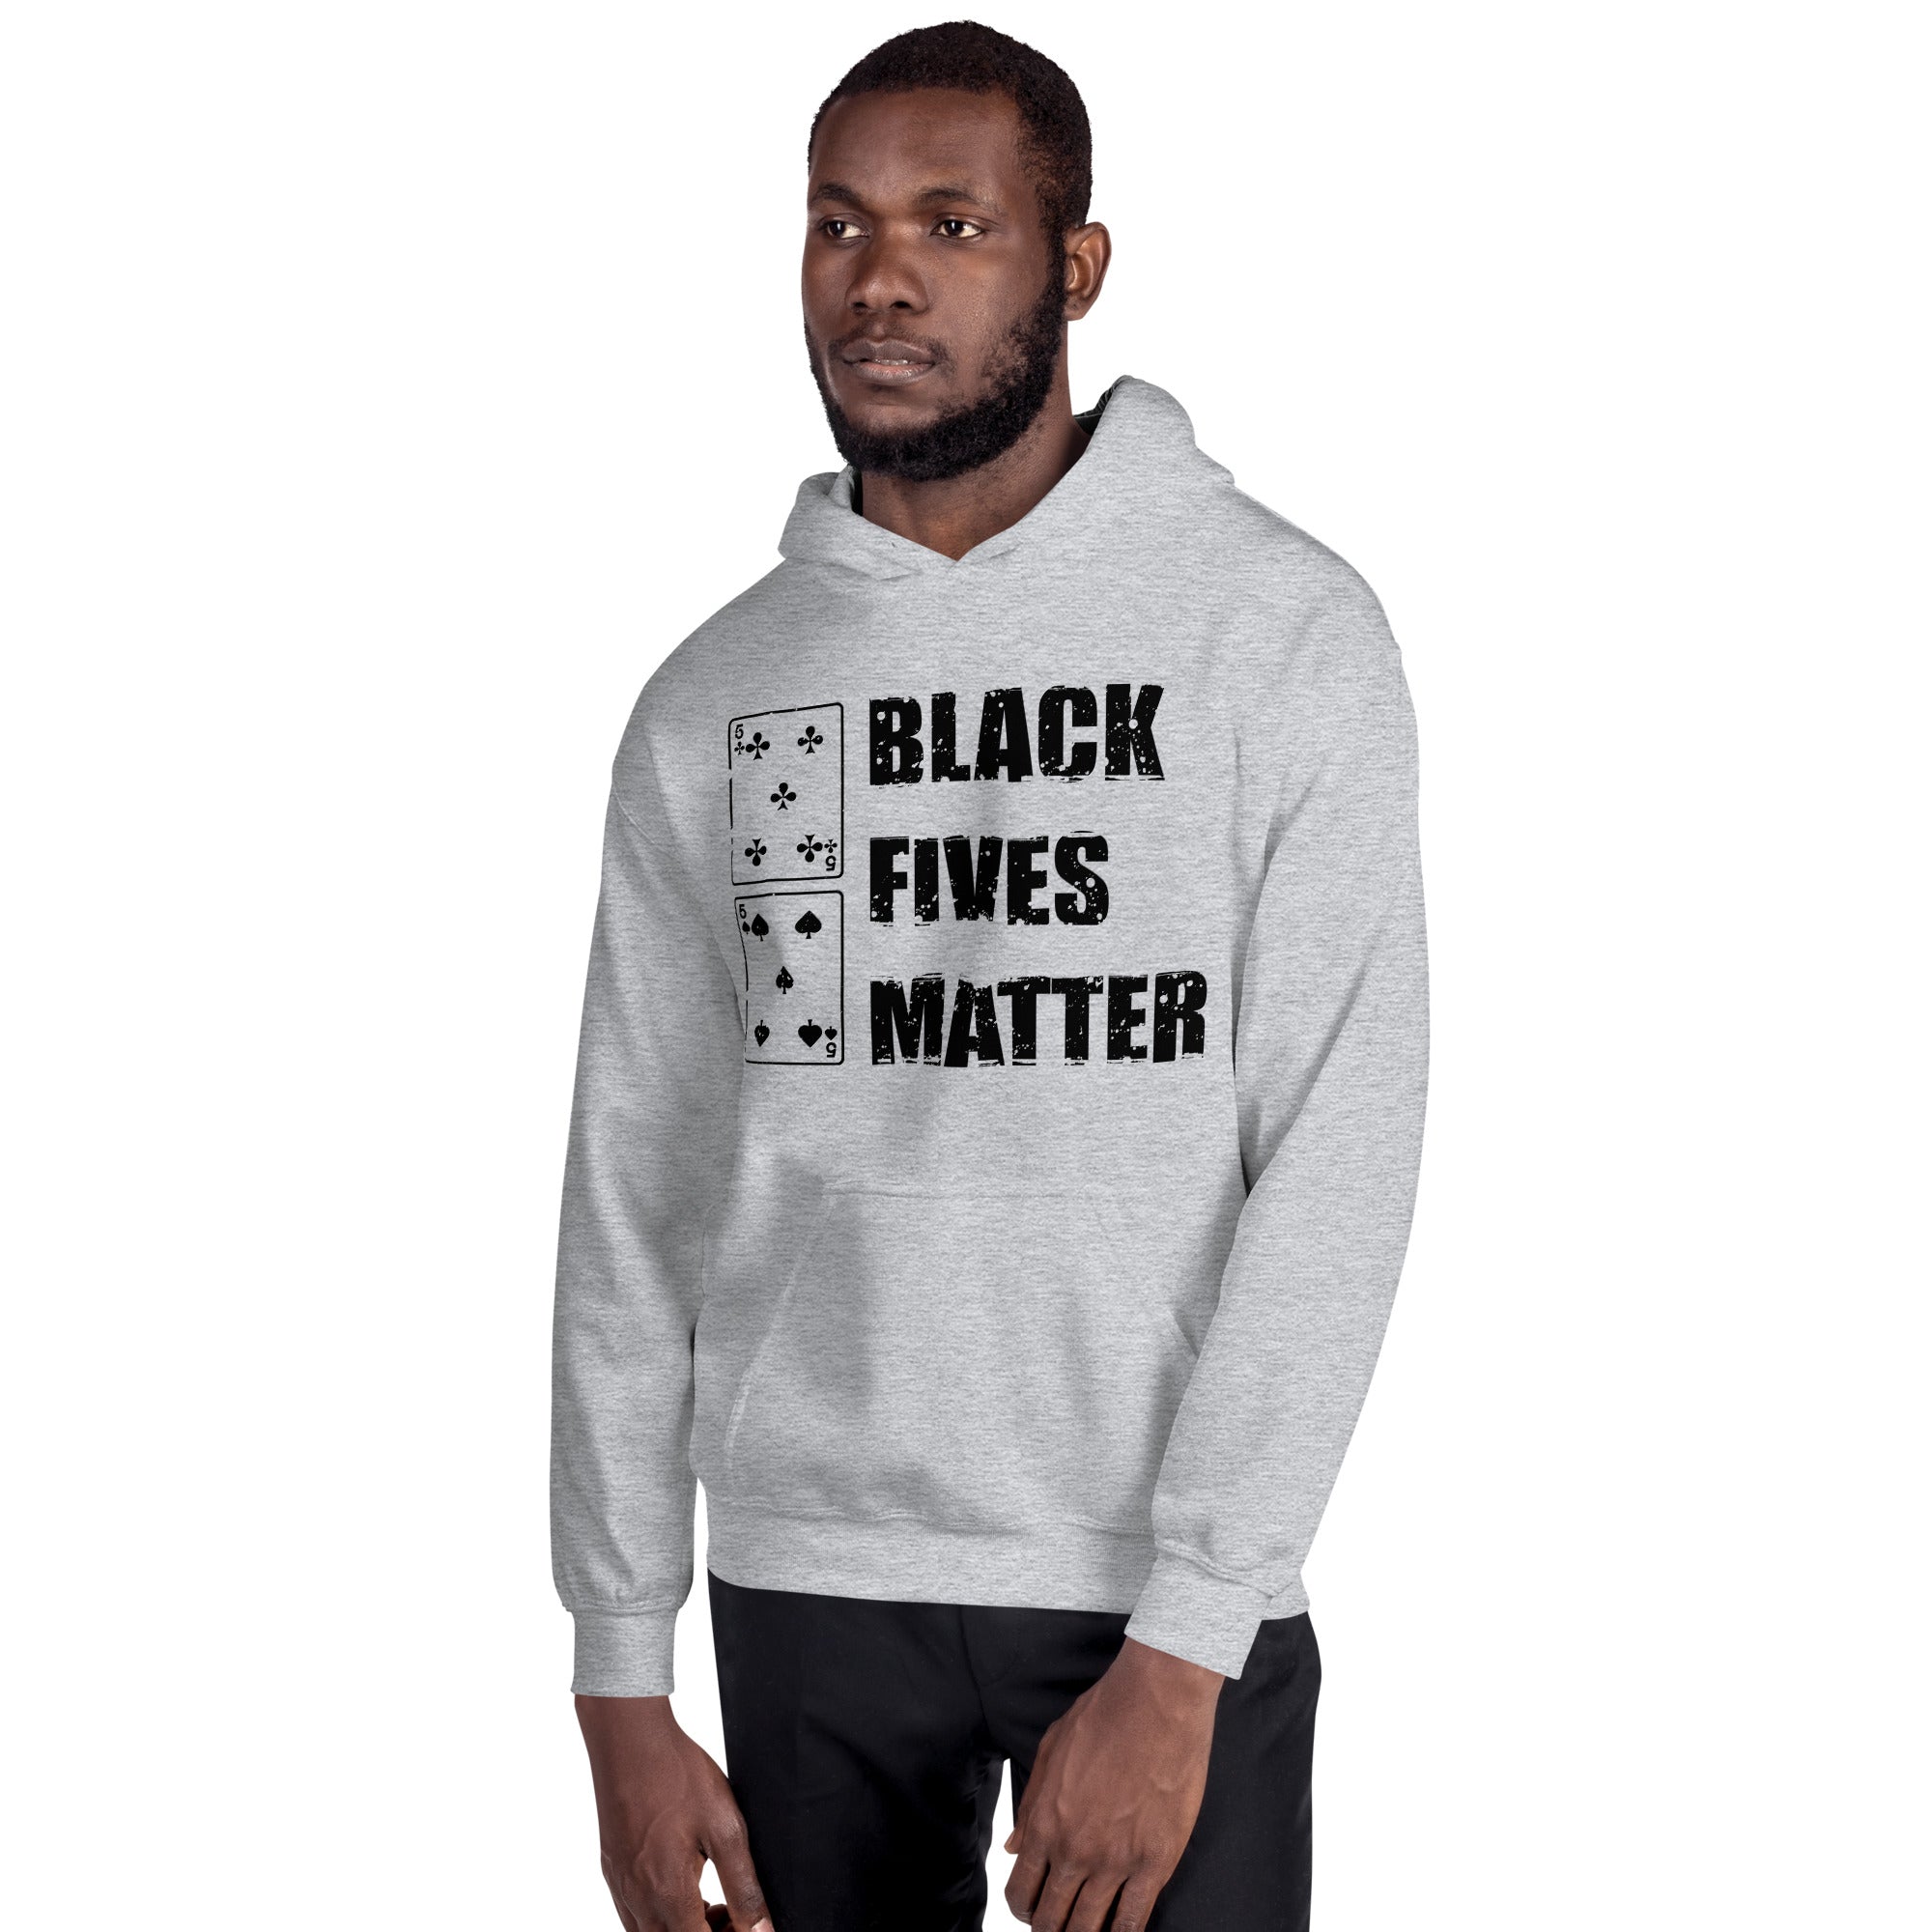 Black Fives Matter - Unisex Hoodie